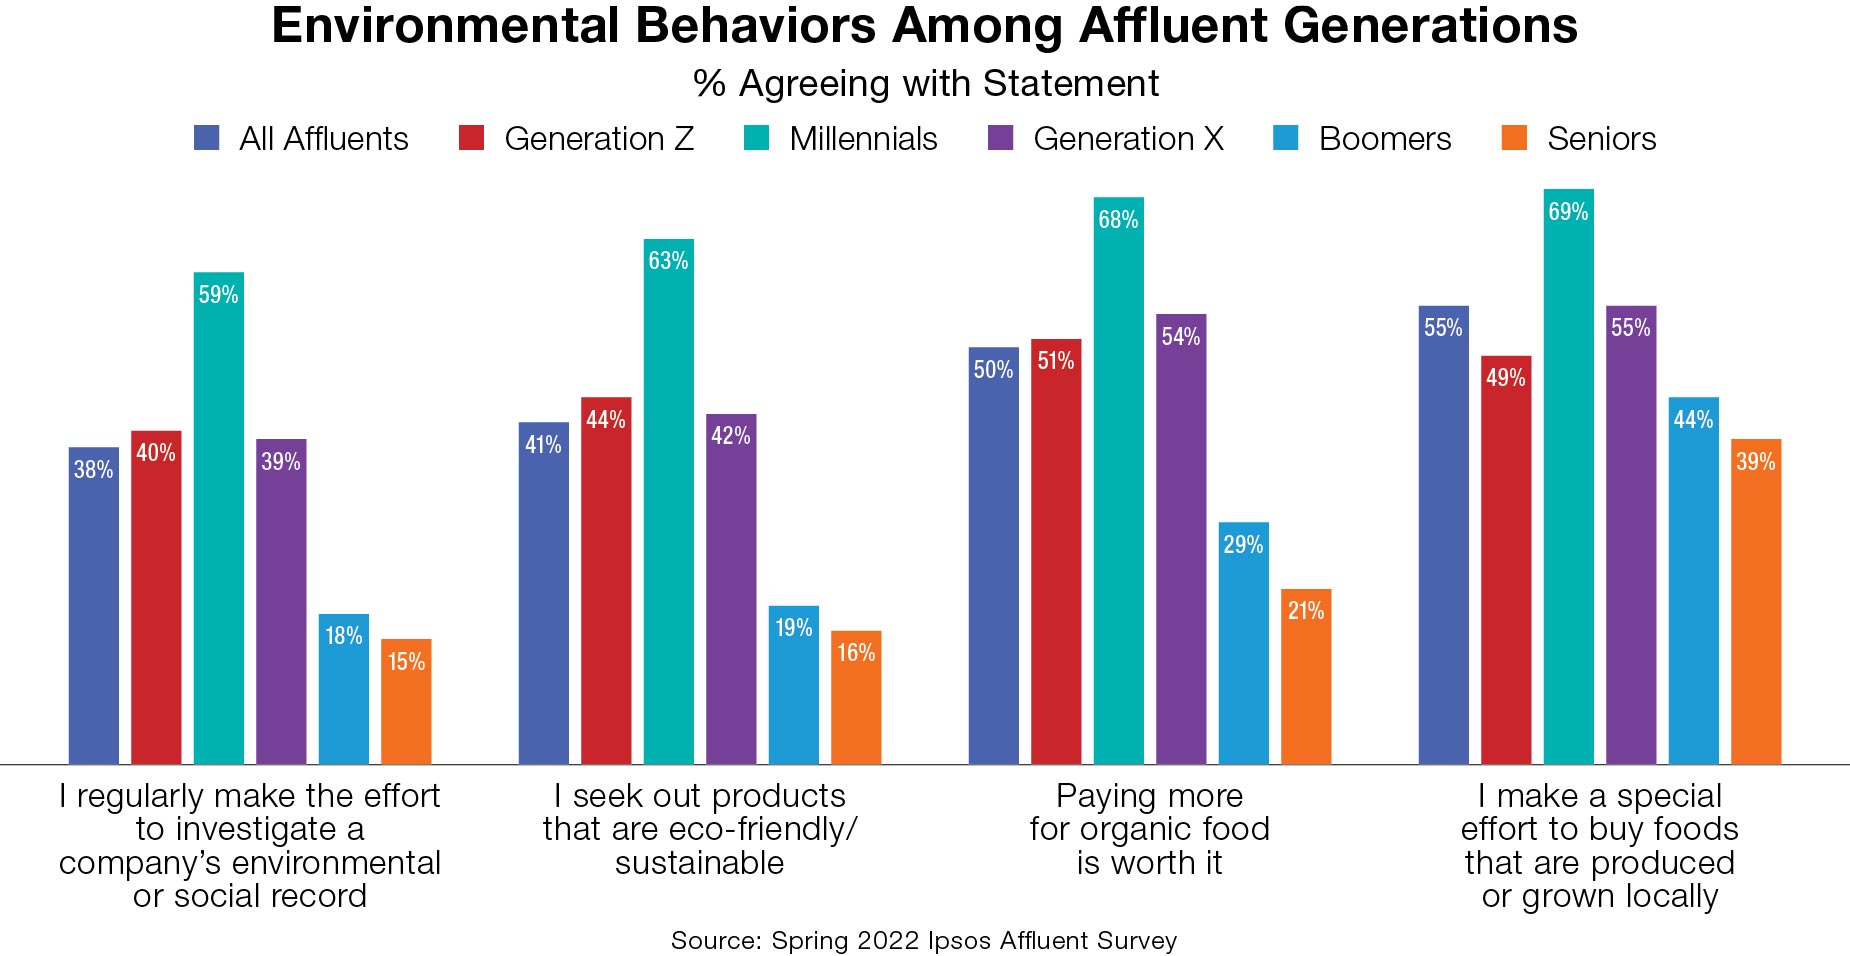 Environmental behaviors among Affluent generations